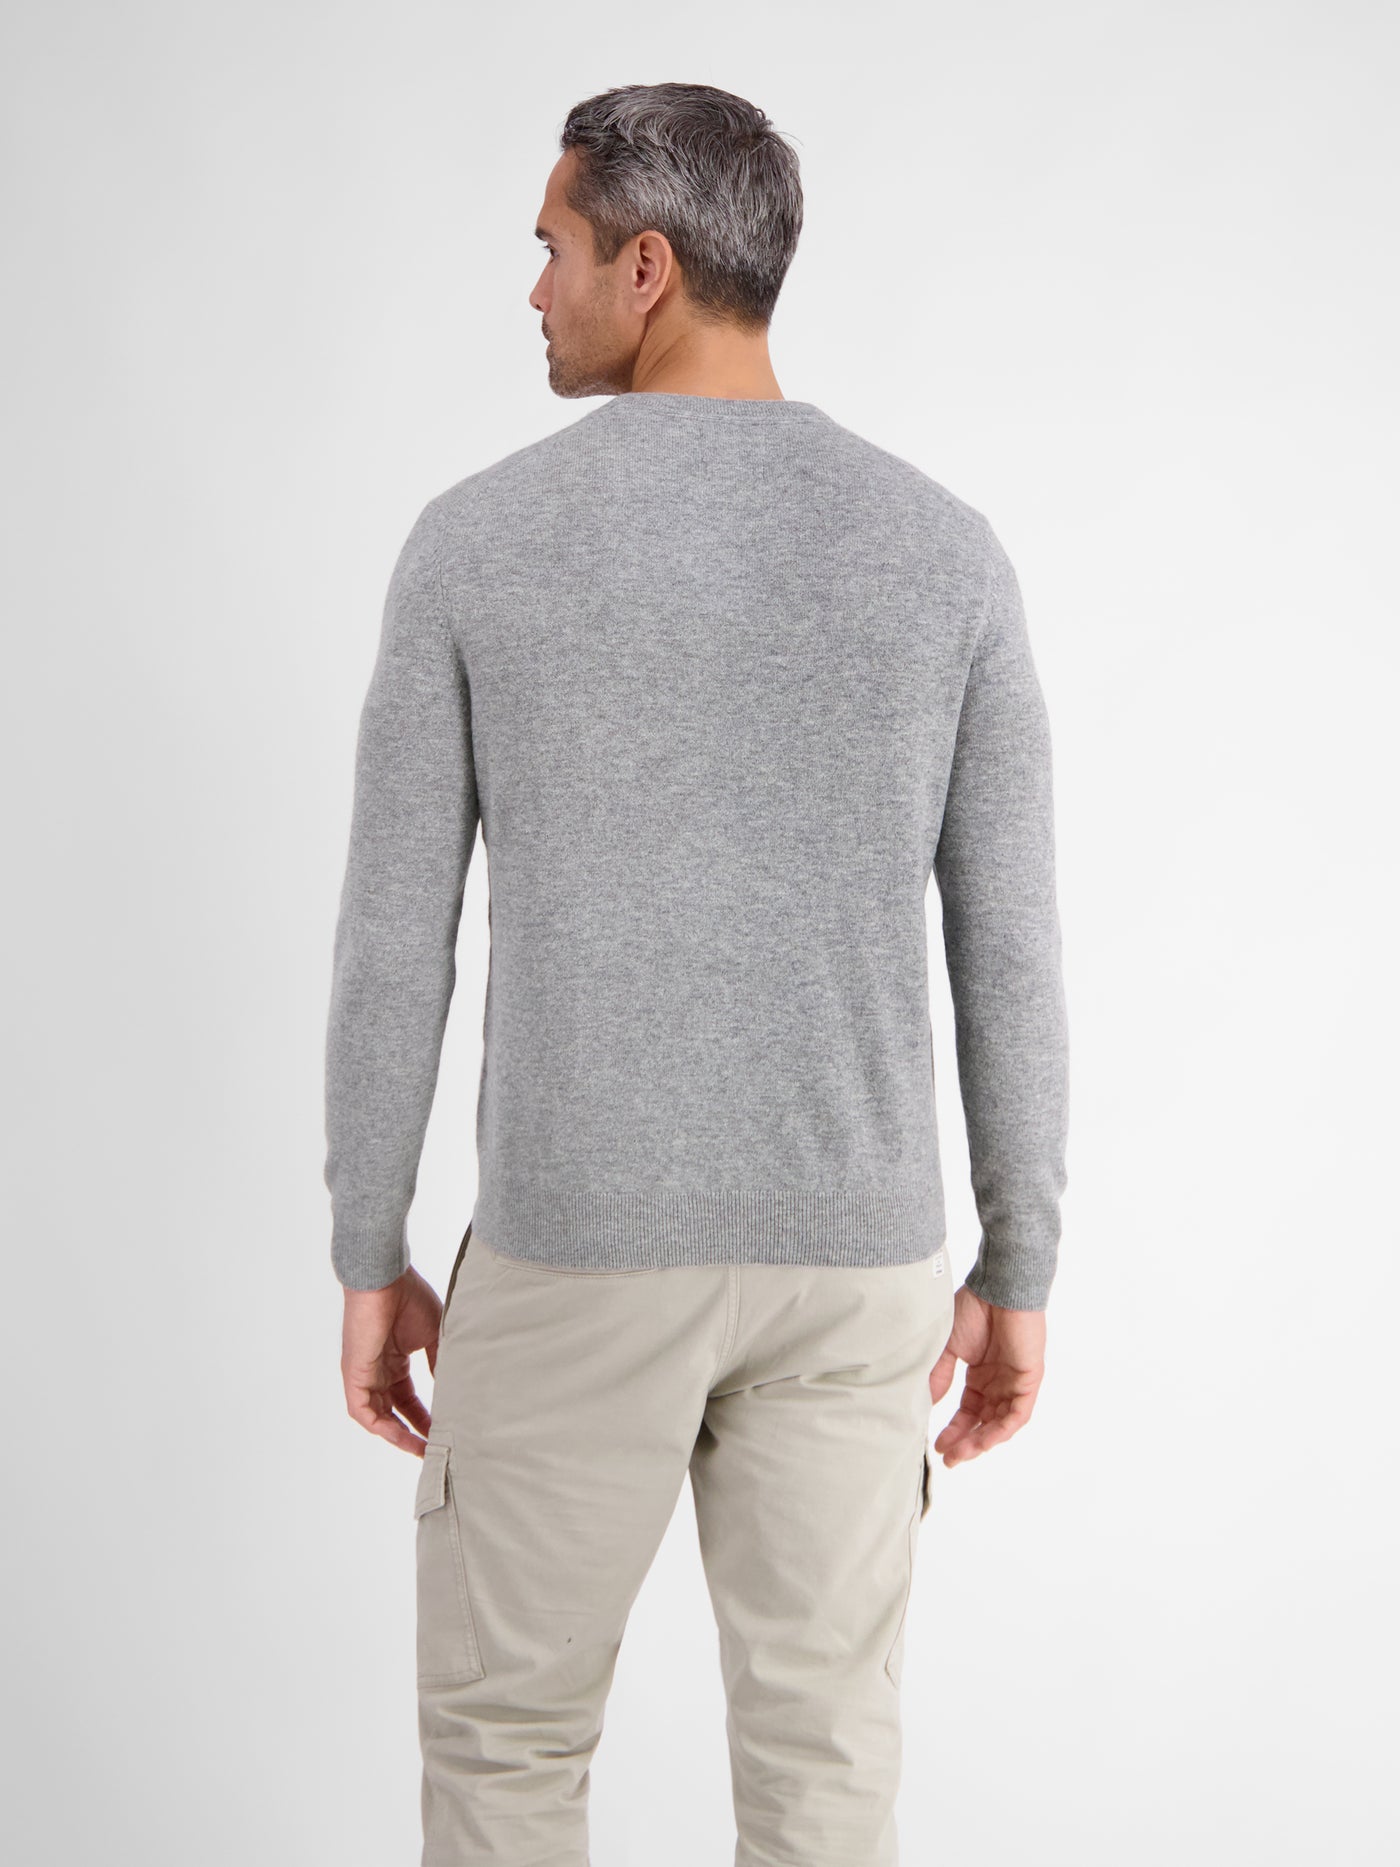 Wool cashmere crew neck sweater